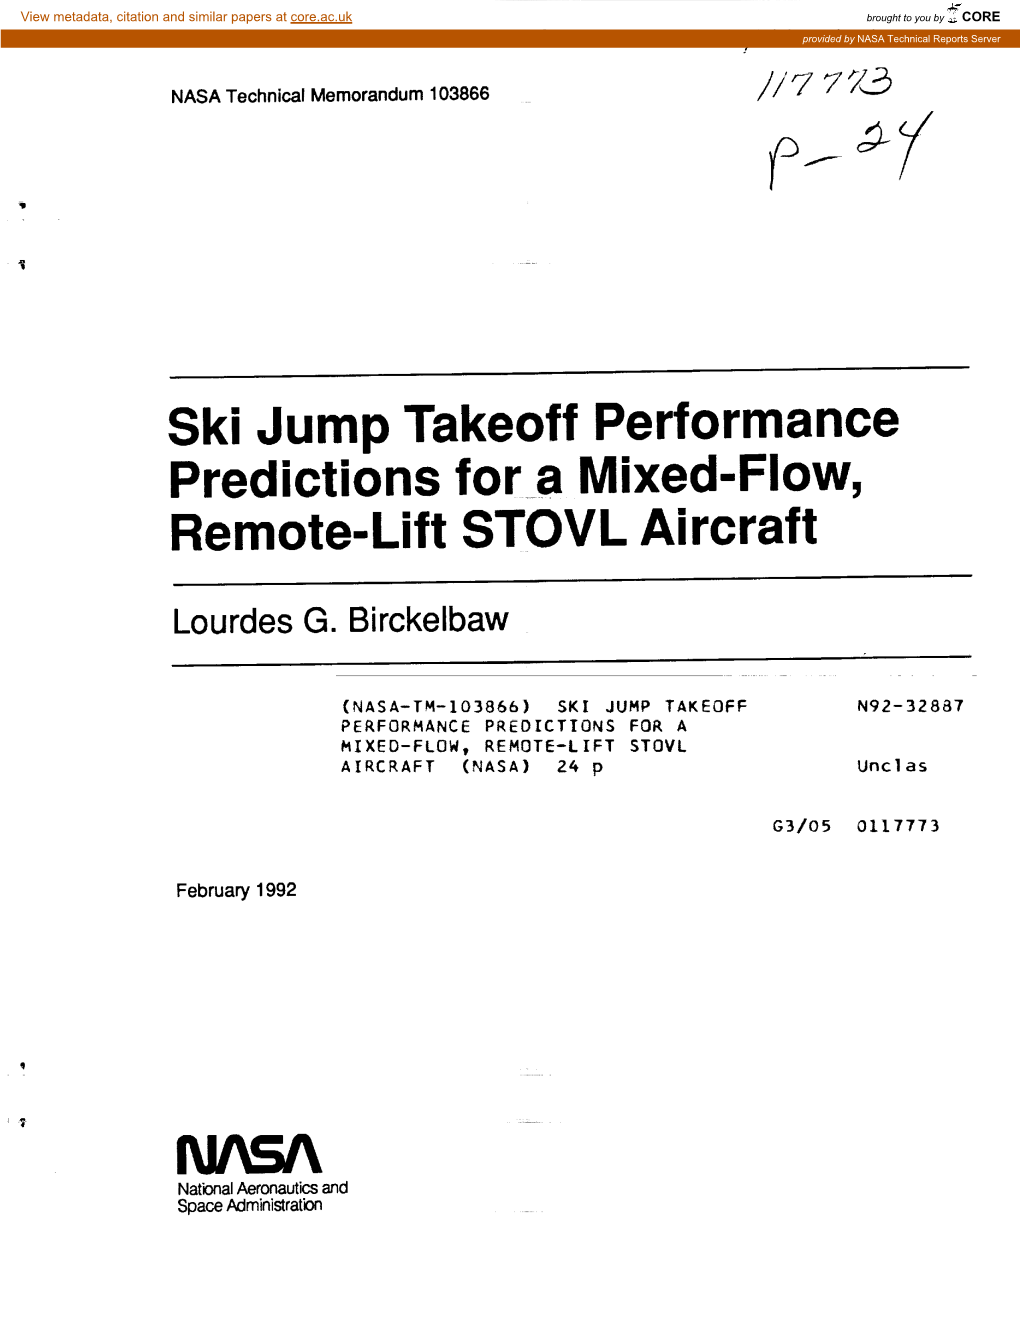 Ski Jump Takeoff Performance Predictions Fora Mixed-Flow, Remote-Lift STOVL Aircraft